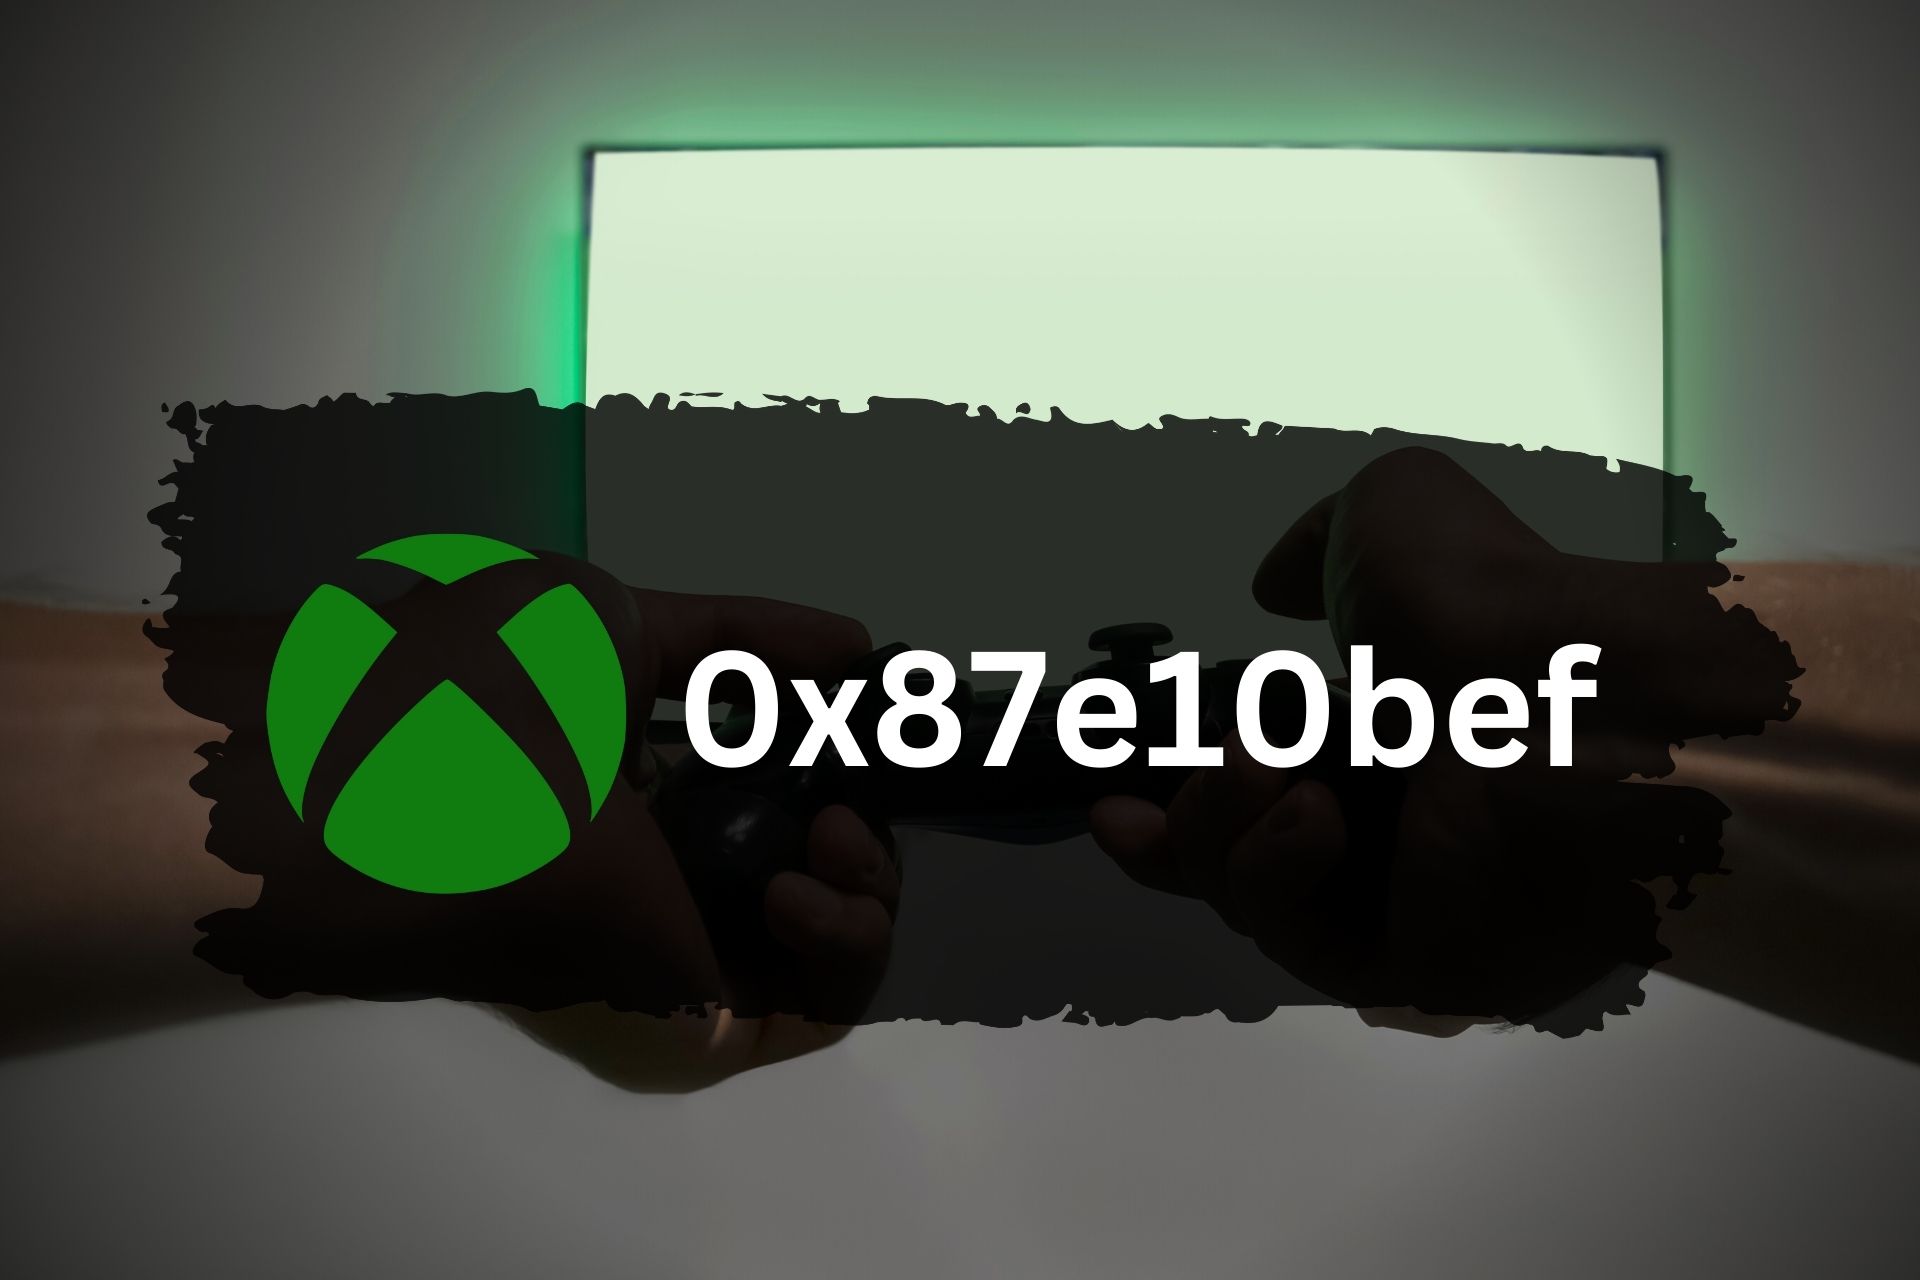 corregir el código de error de xbox 0x87e10bef presentado